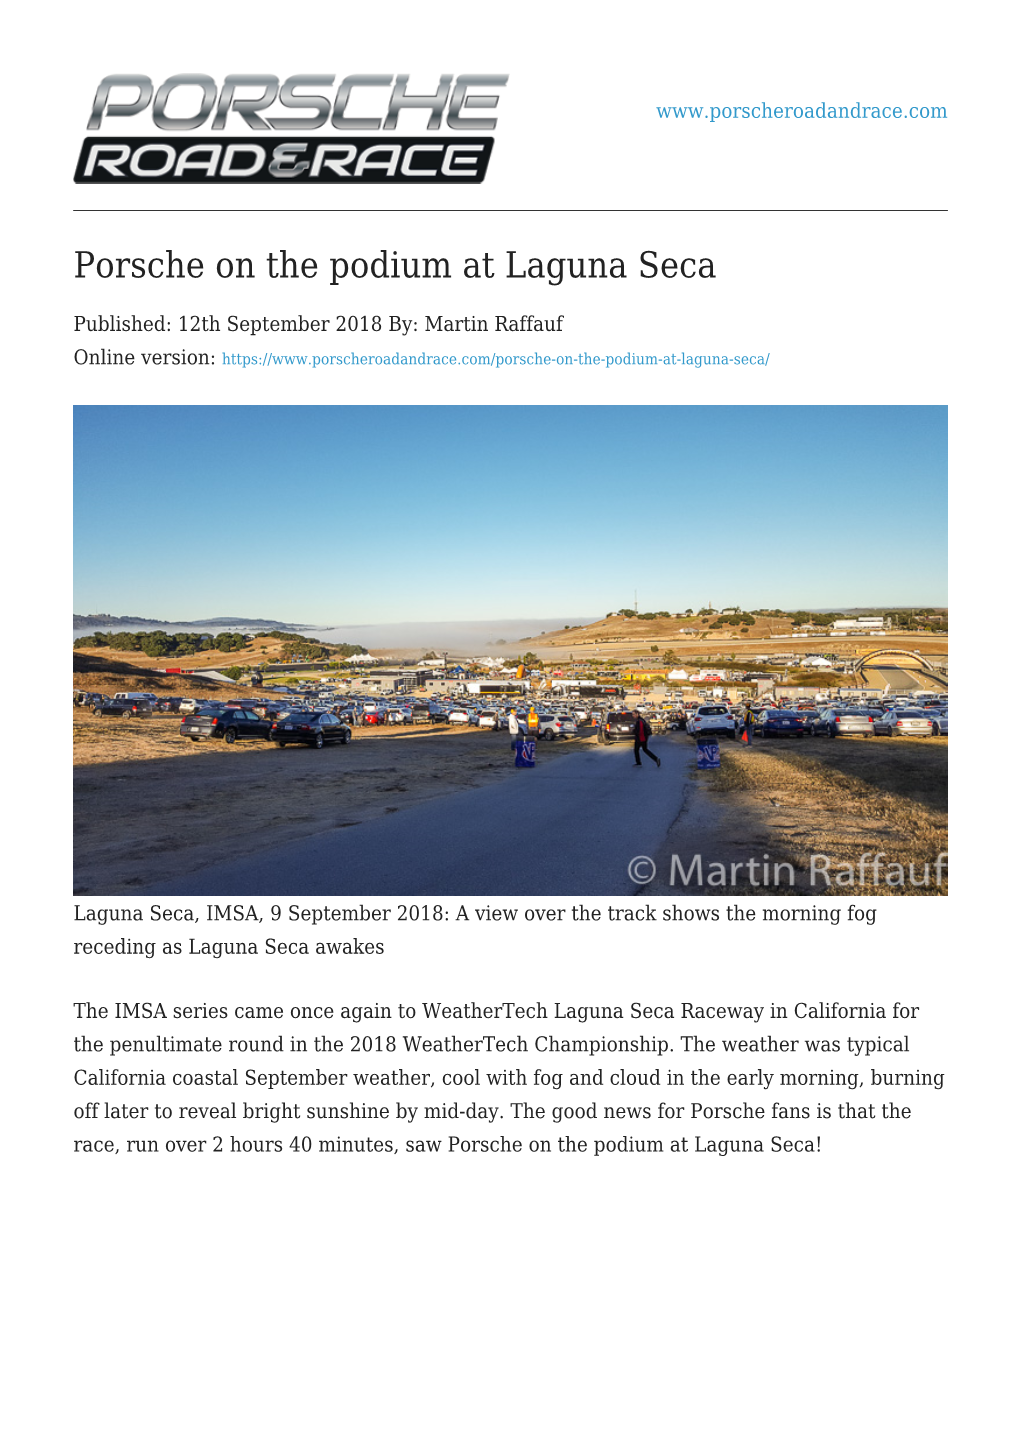 Porsche on the Podium at Laguna Seca